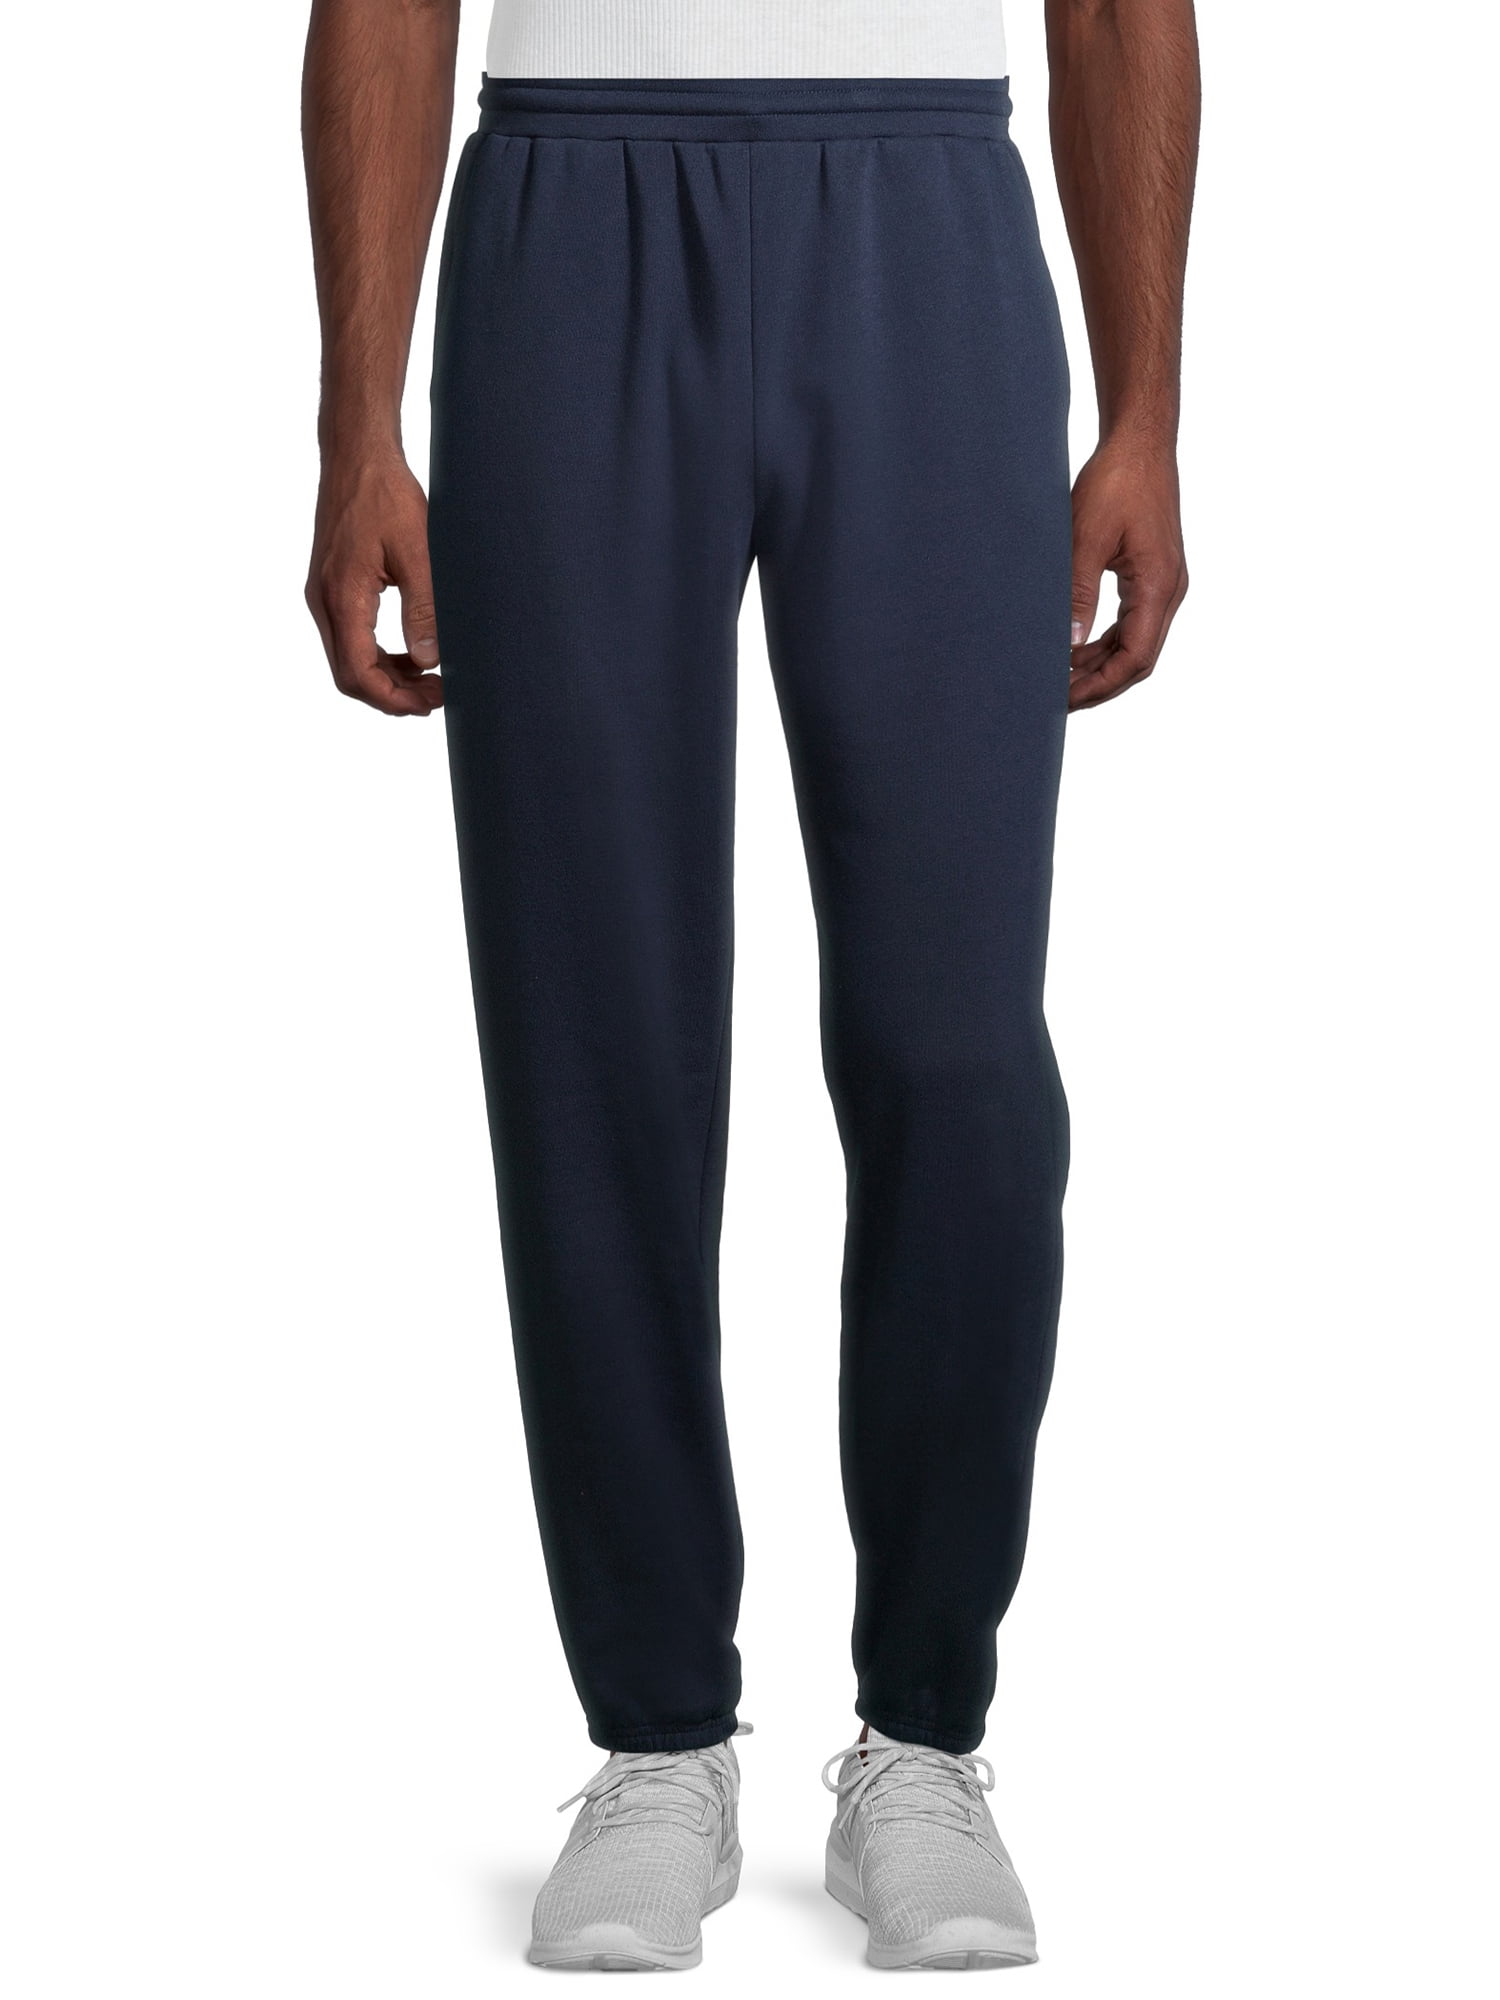 Athletic Works Men's Fleece Cinch Pants, up to Size 2XL - Walmart.com